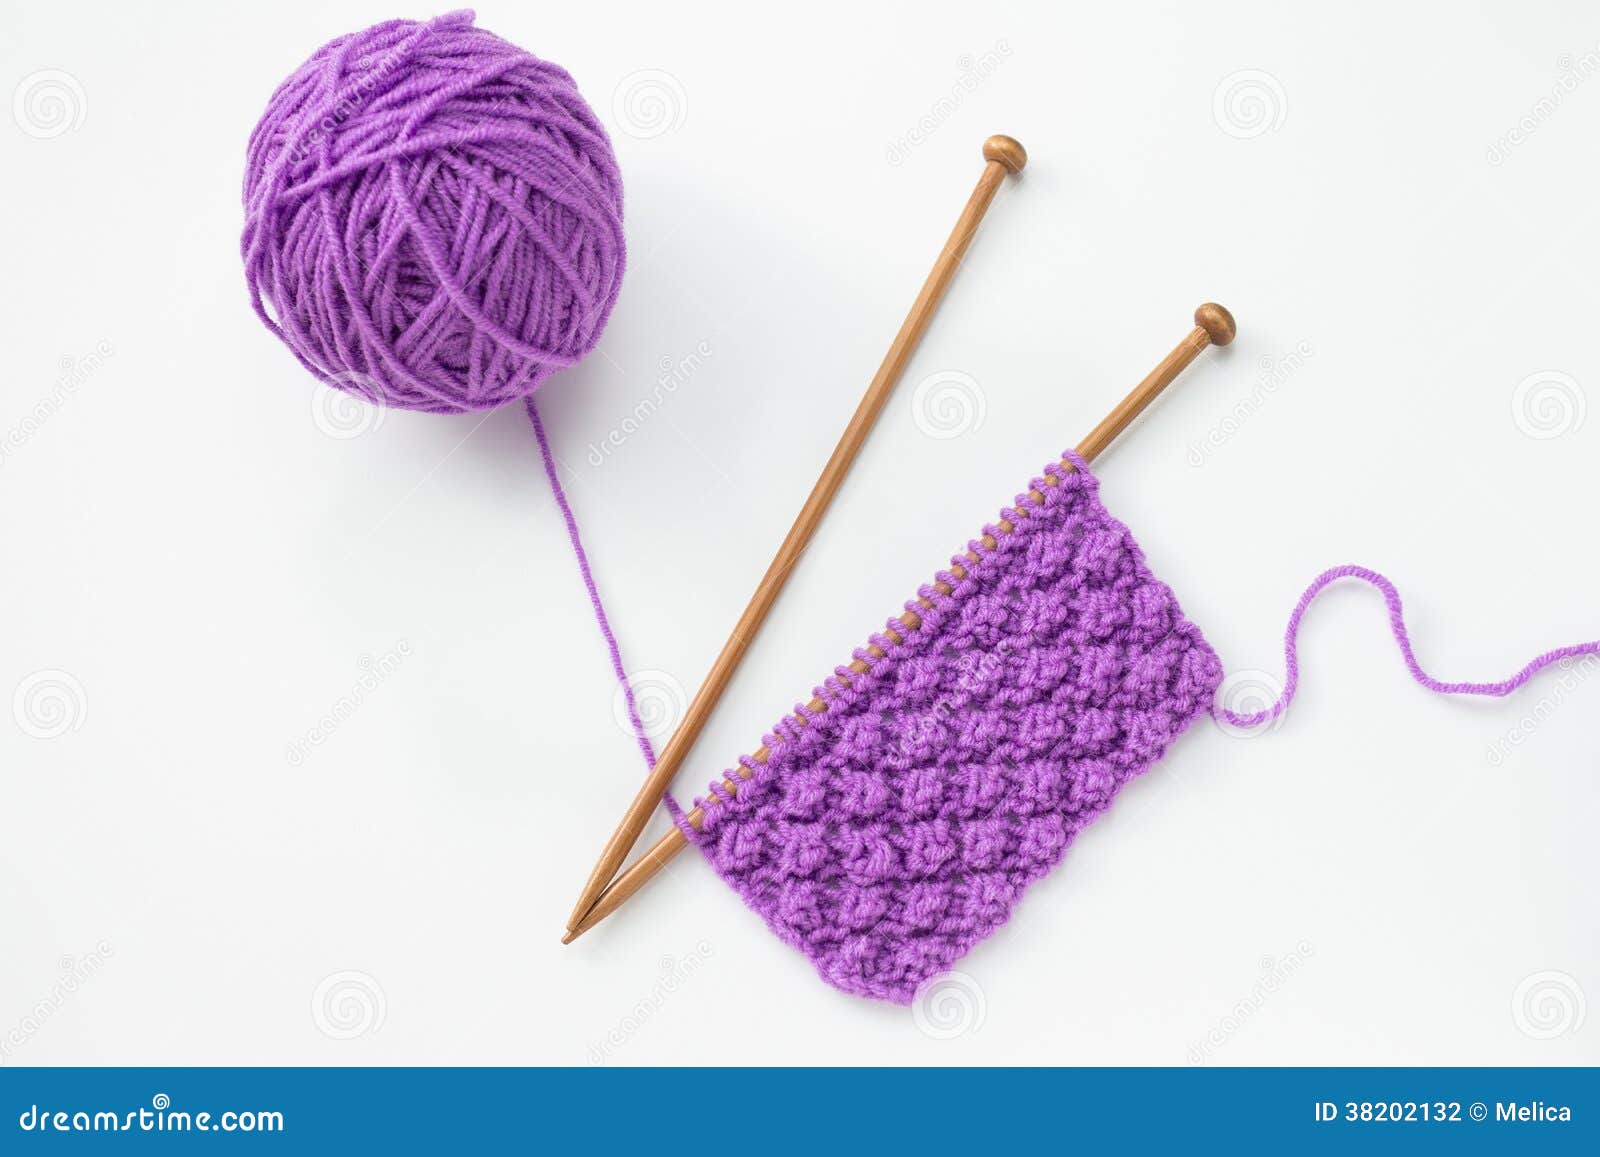 Knitting stock photo. Image of colors, fashion, fabric - 38202132